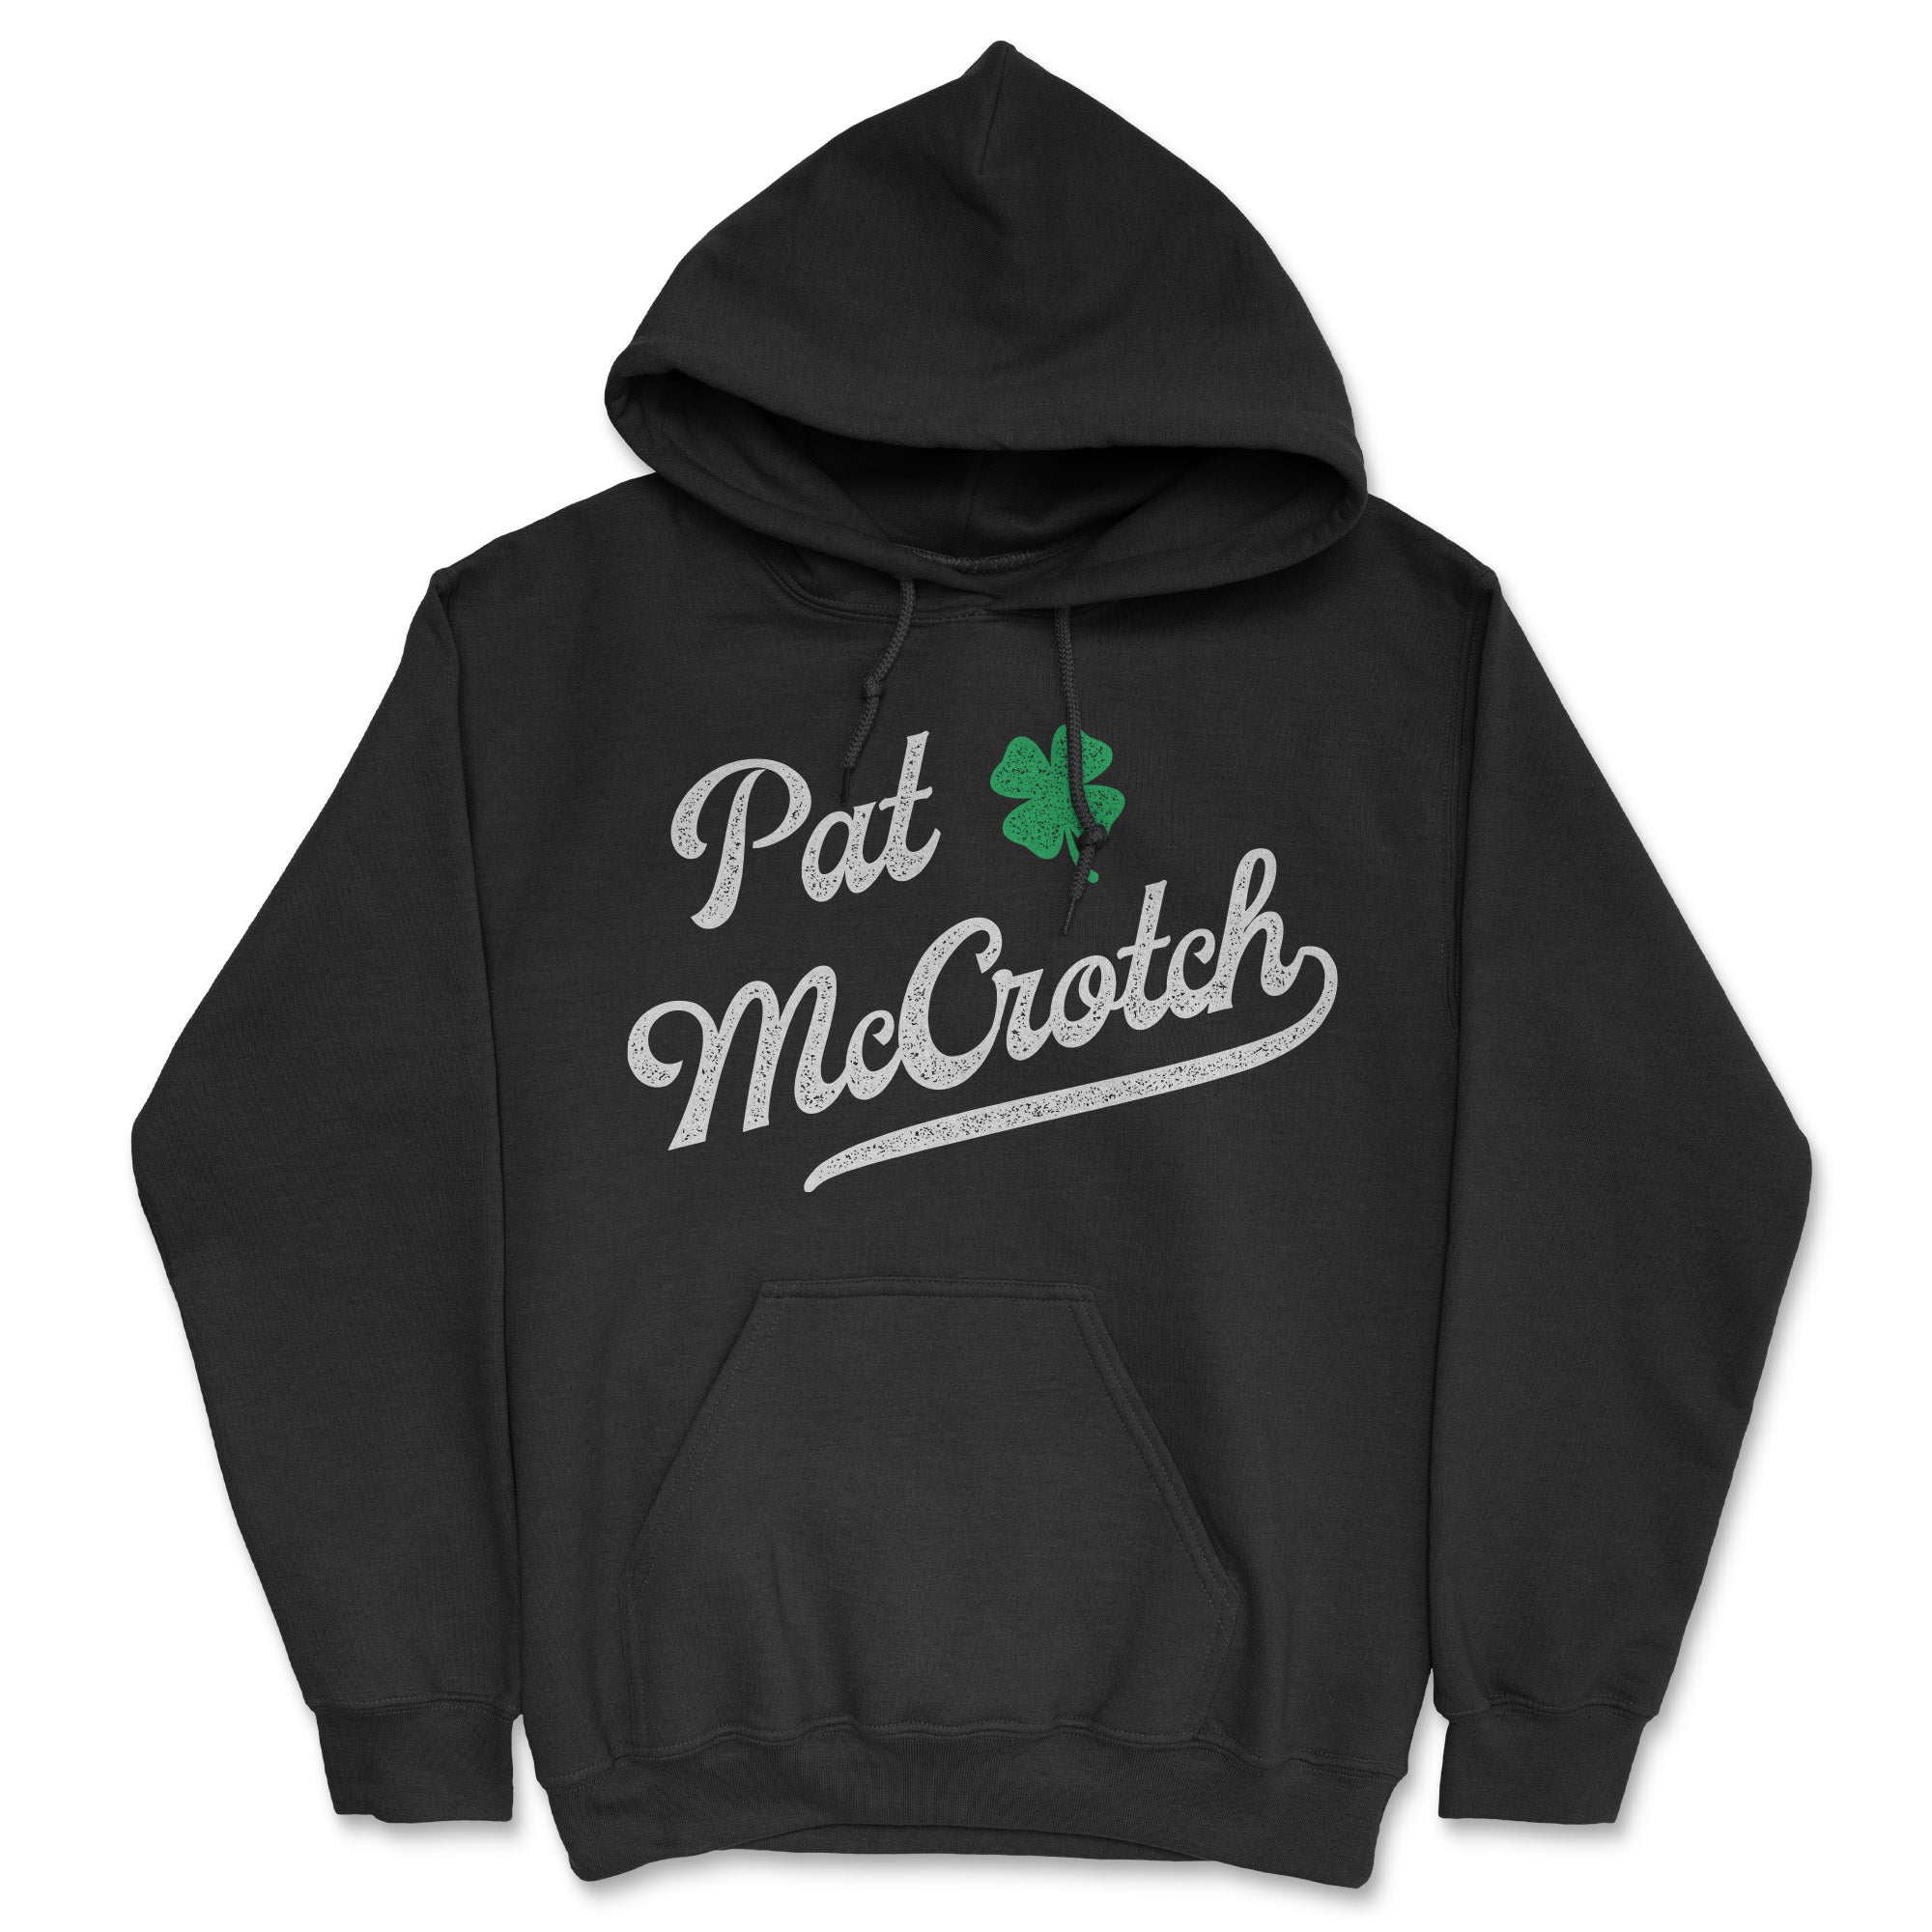 Funny Black - Pat McCrotch Pat McCrotch Hoodie Nerdy Saint Patrick's Day sex Tee